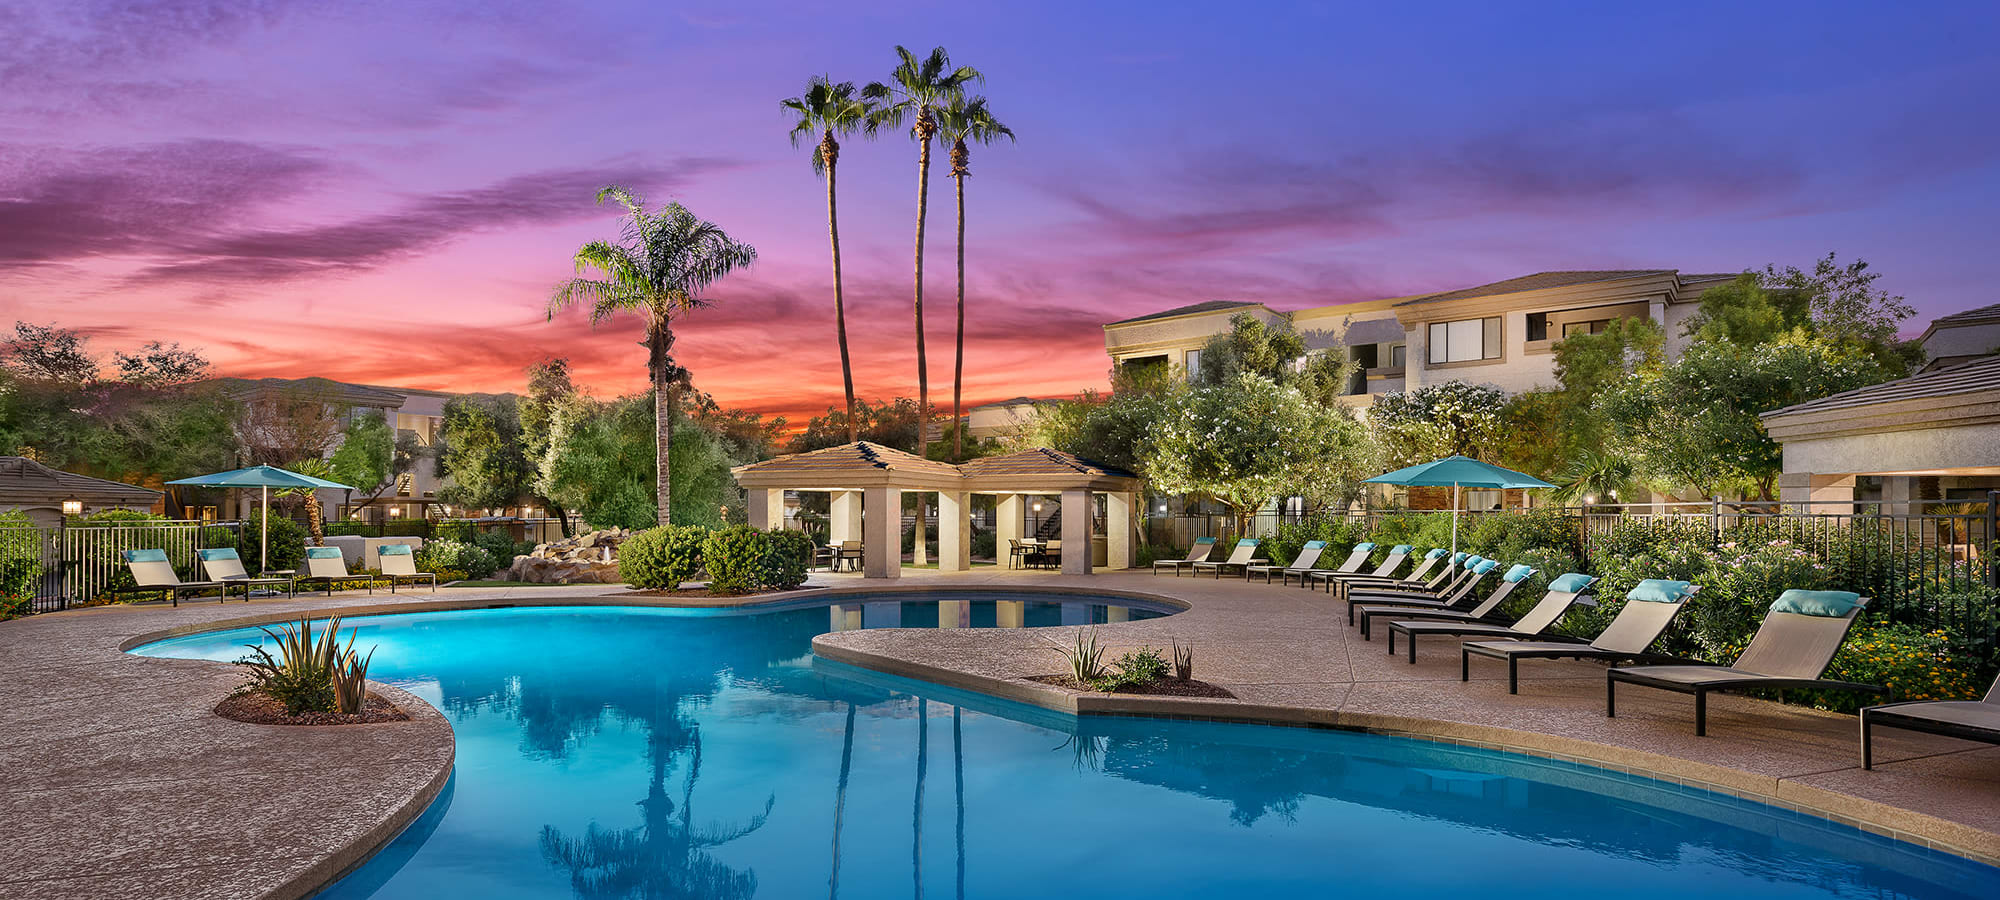 Resort-inspired pool at Waterside at Ocotillo in Chandler, Arizona